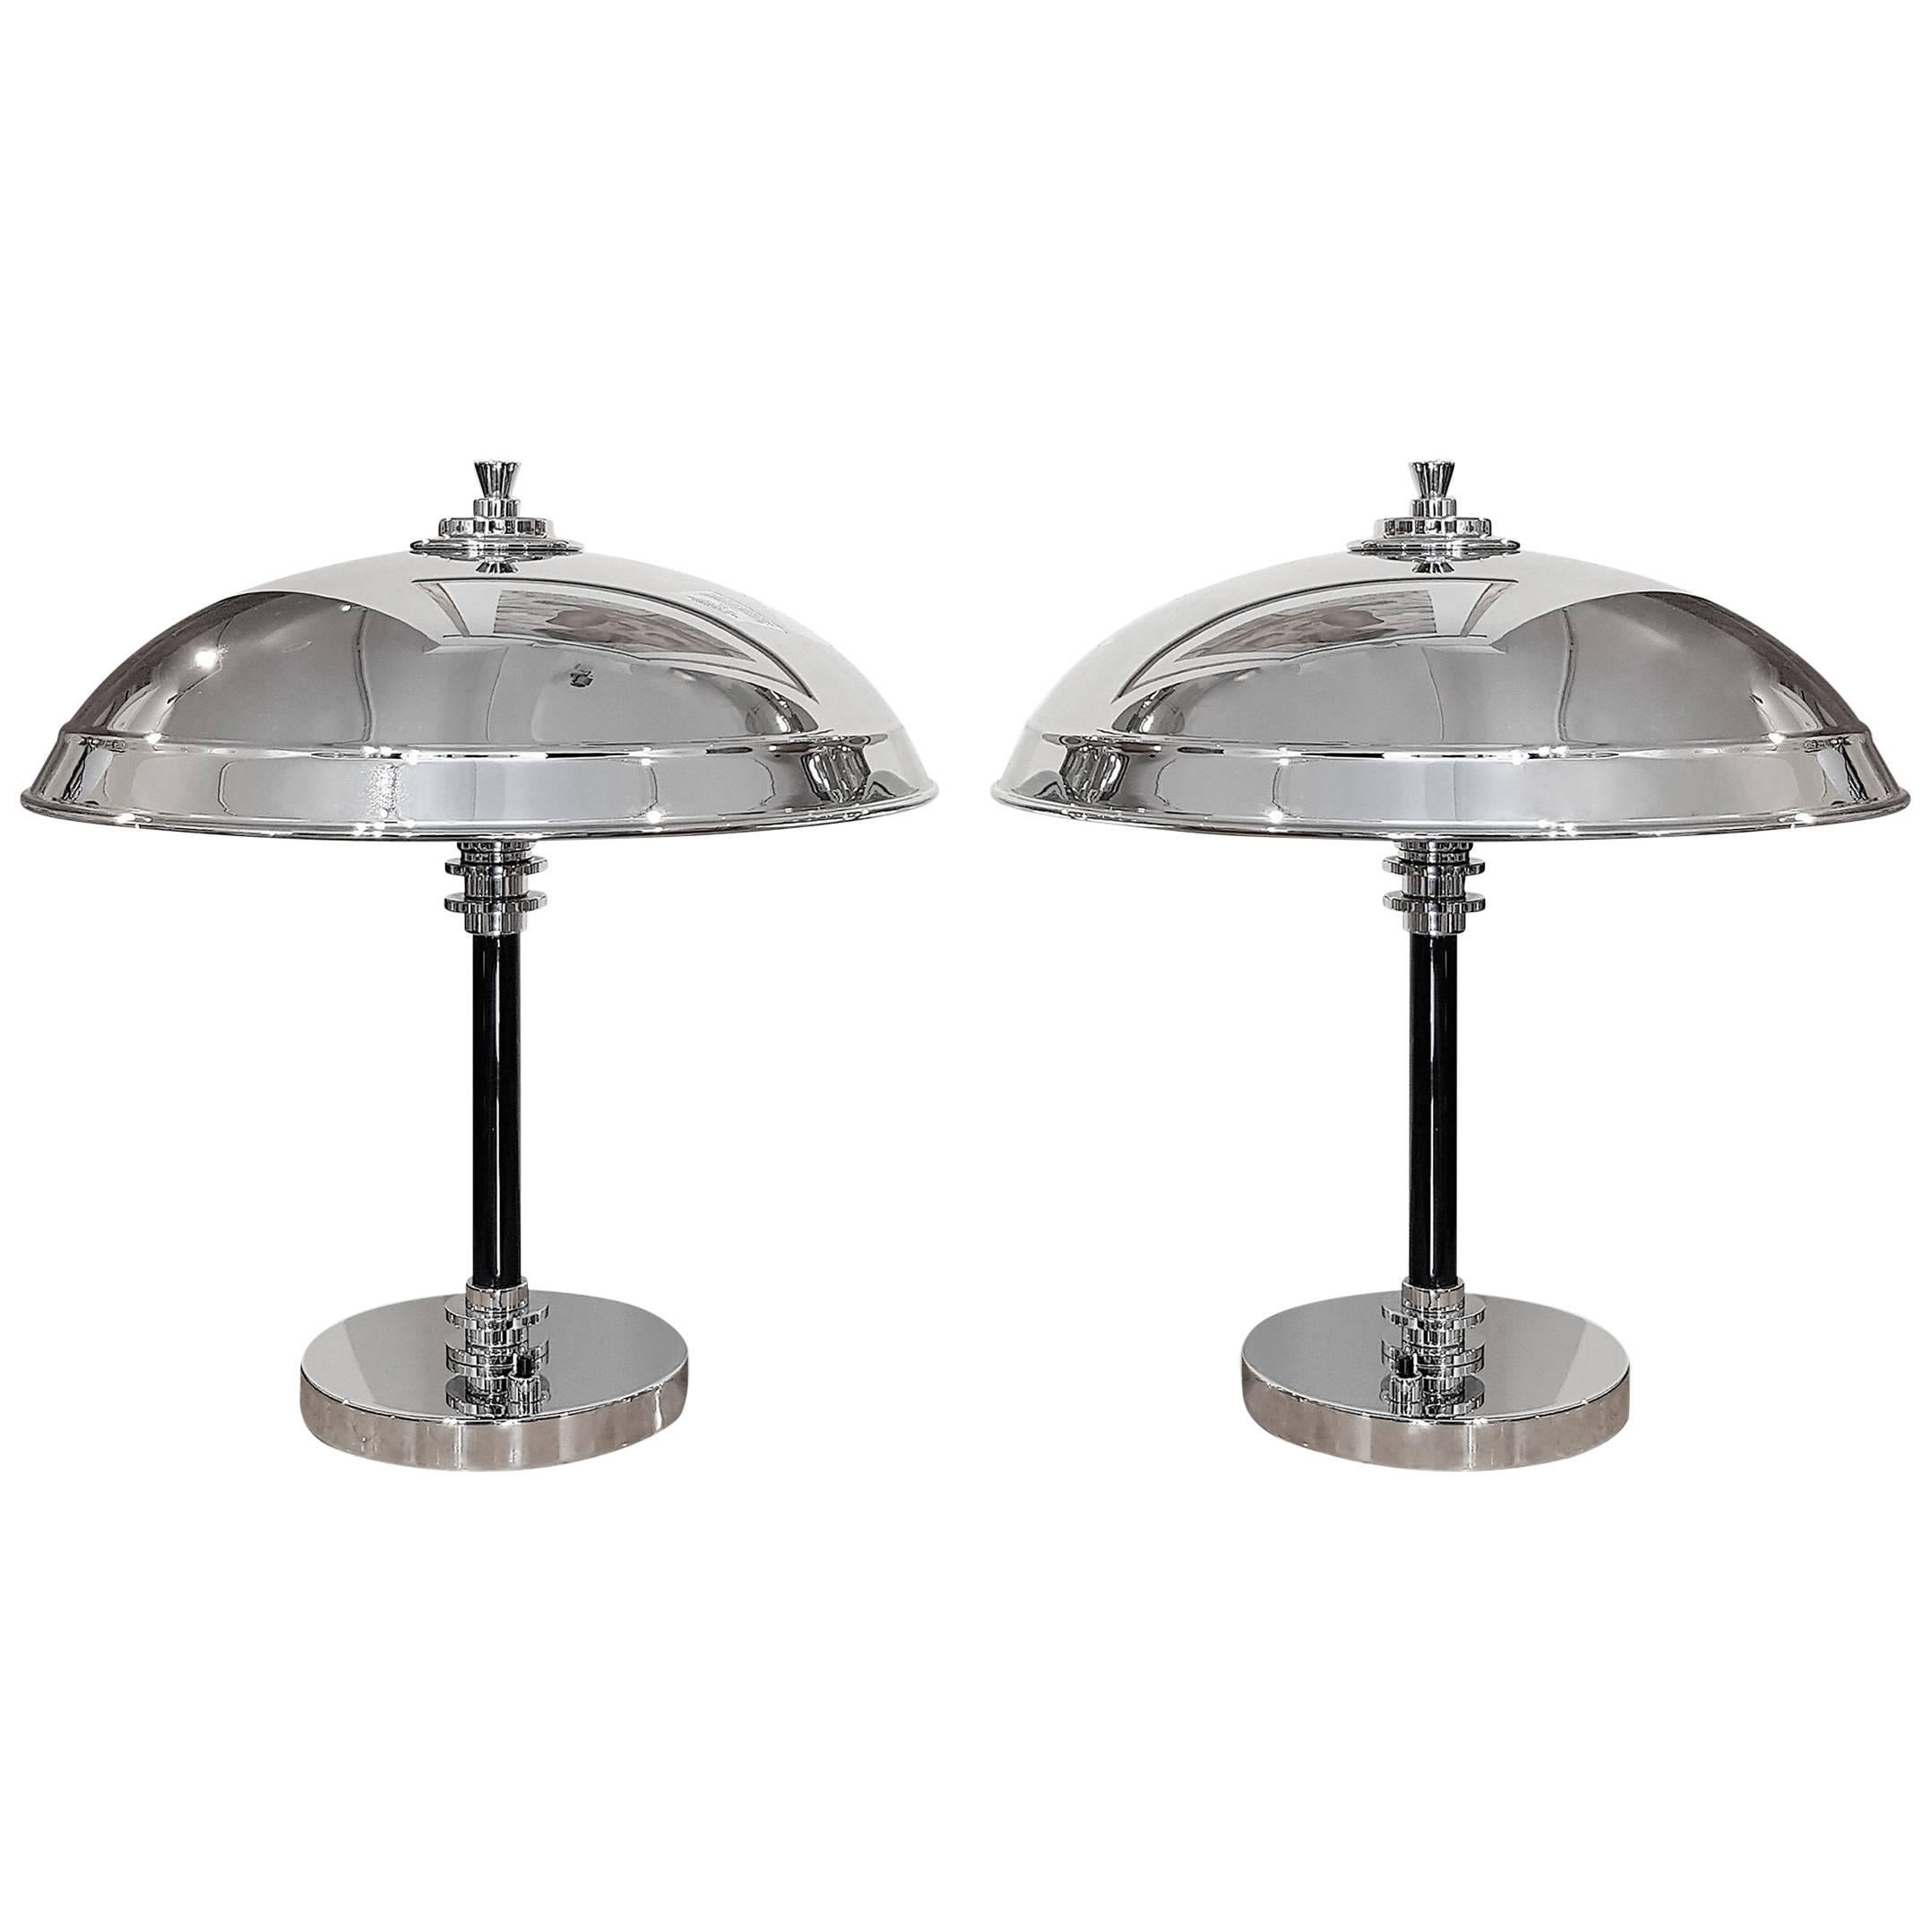 Original Art Deco Pair of Dome Lamps For Sale